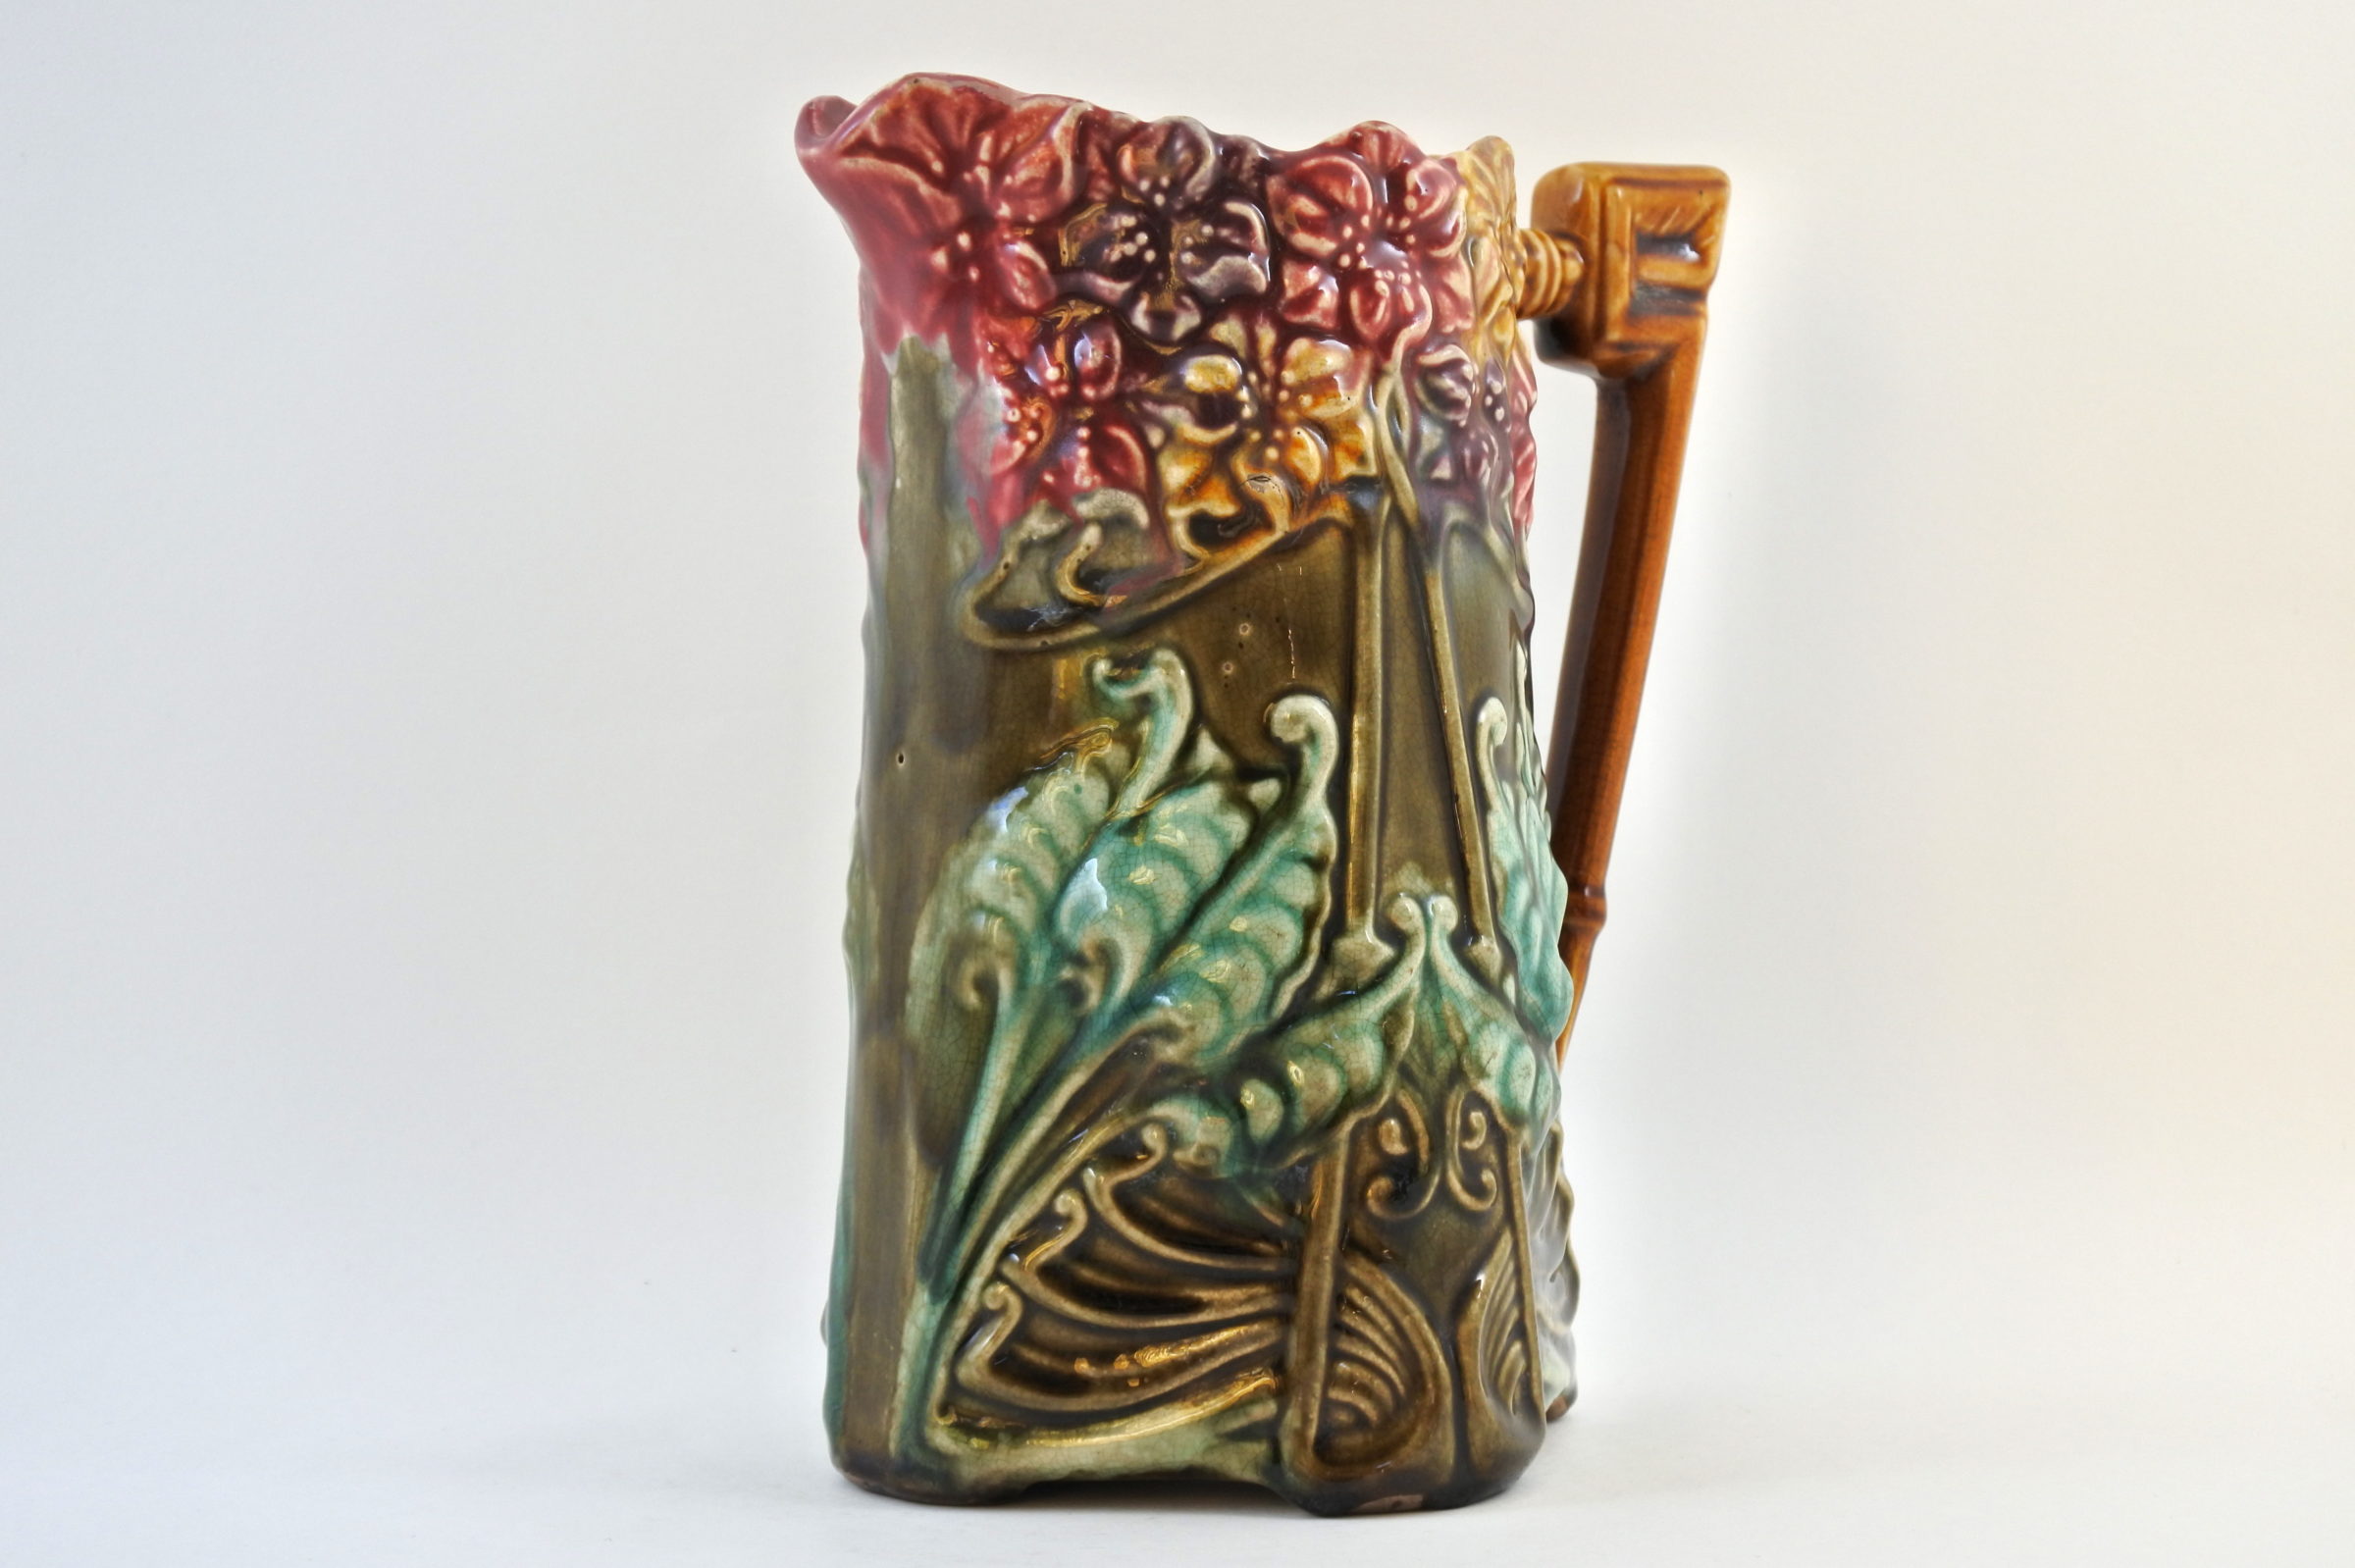 Brocca in ceramica barbotine con giacinti - Jacinthes